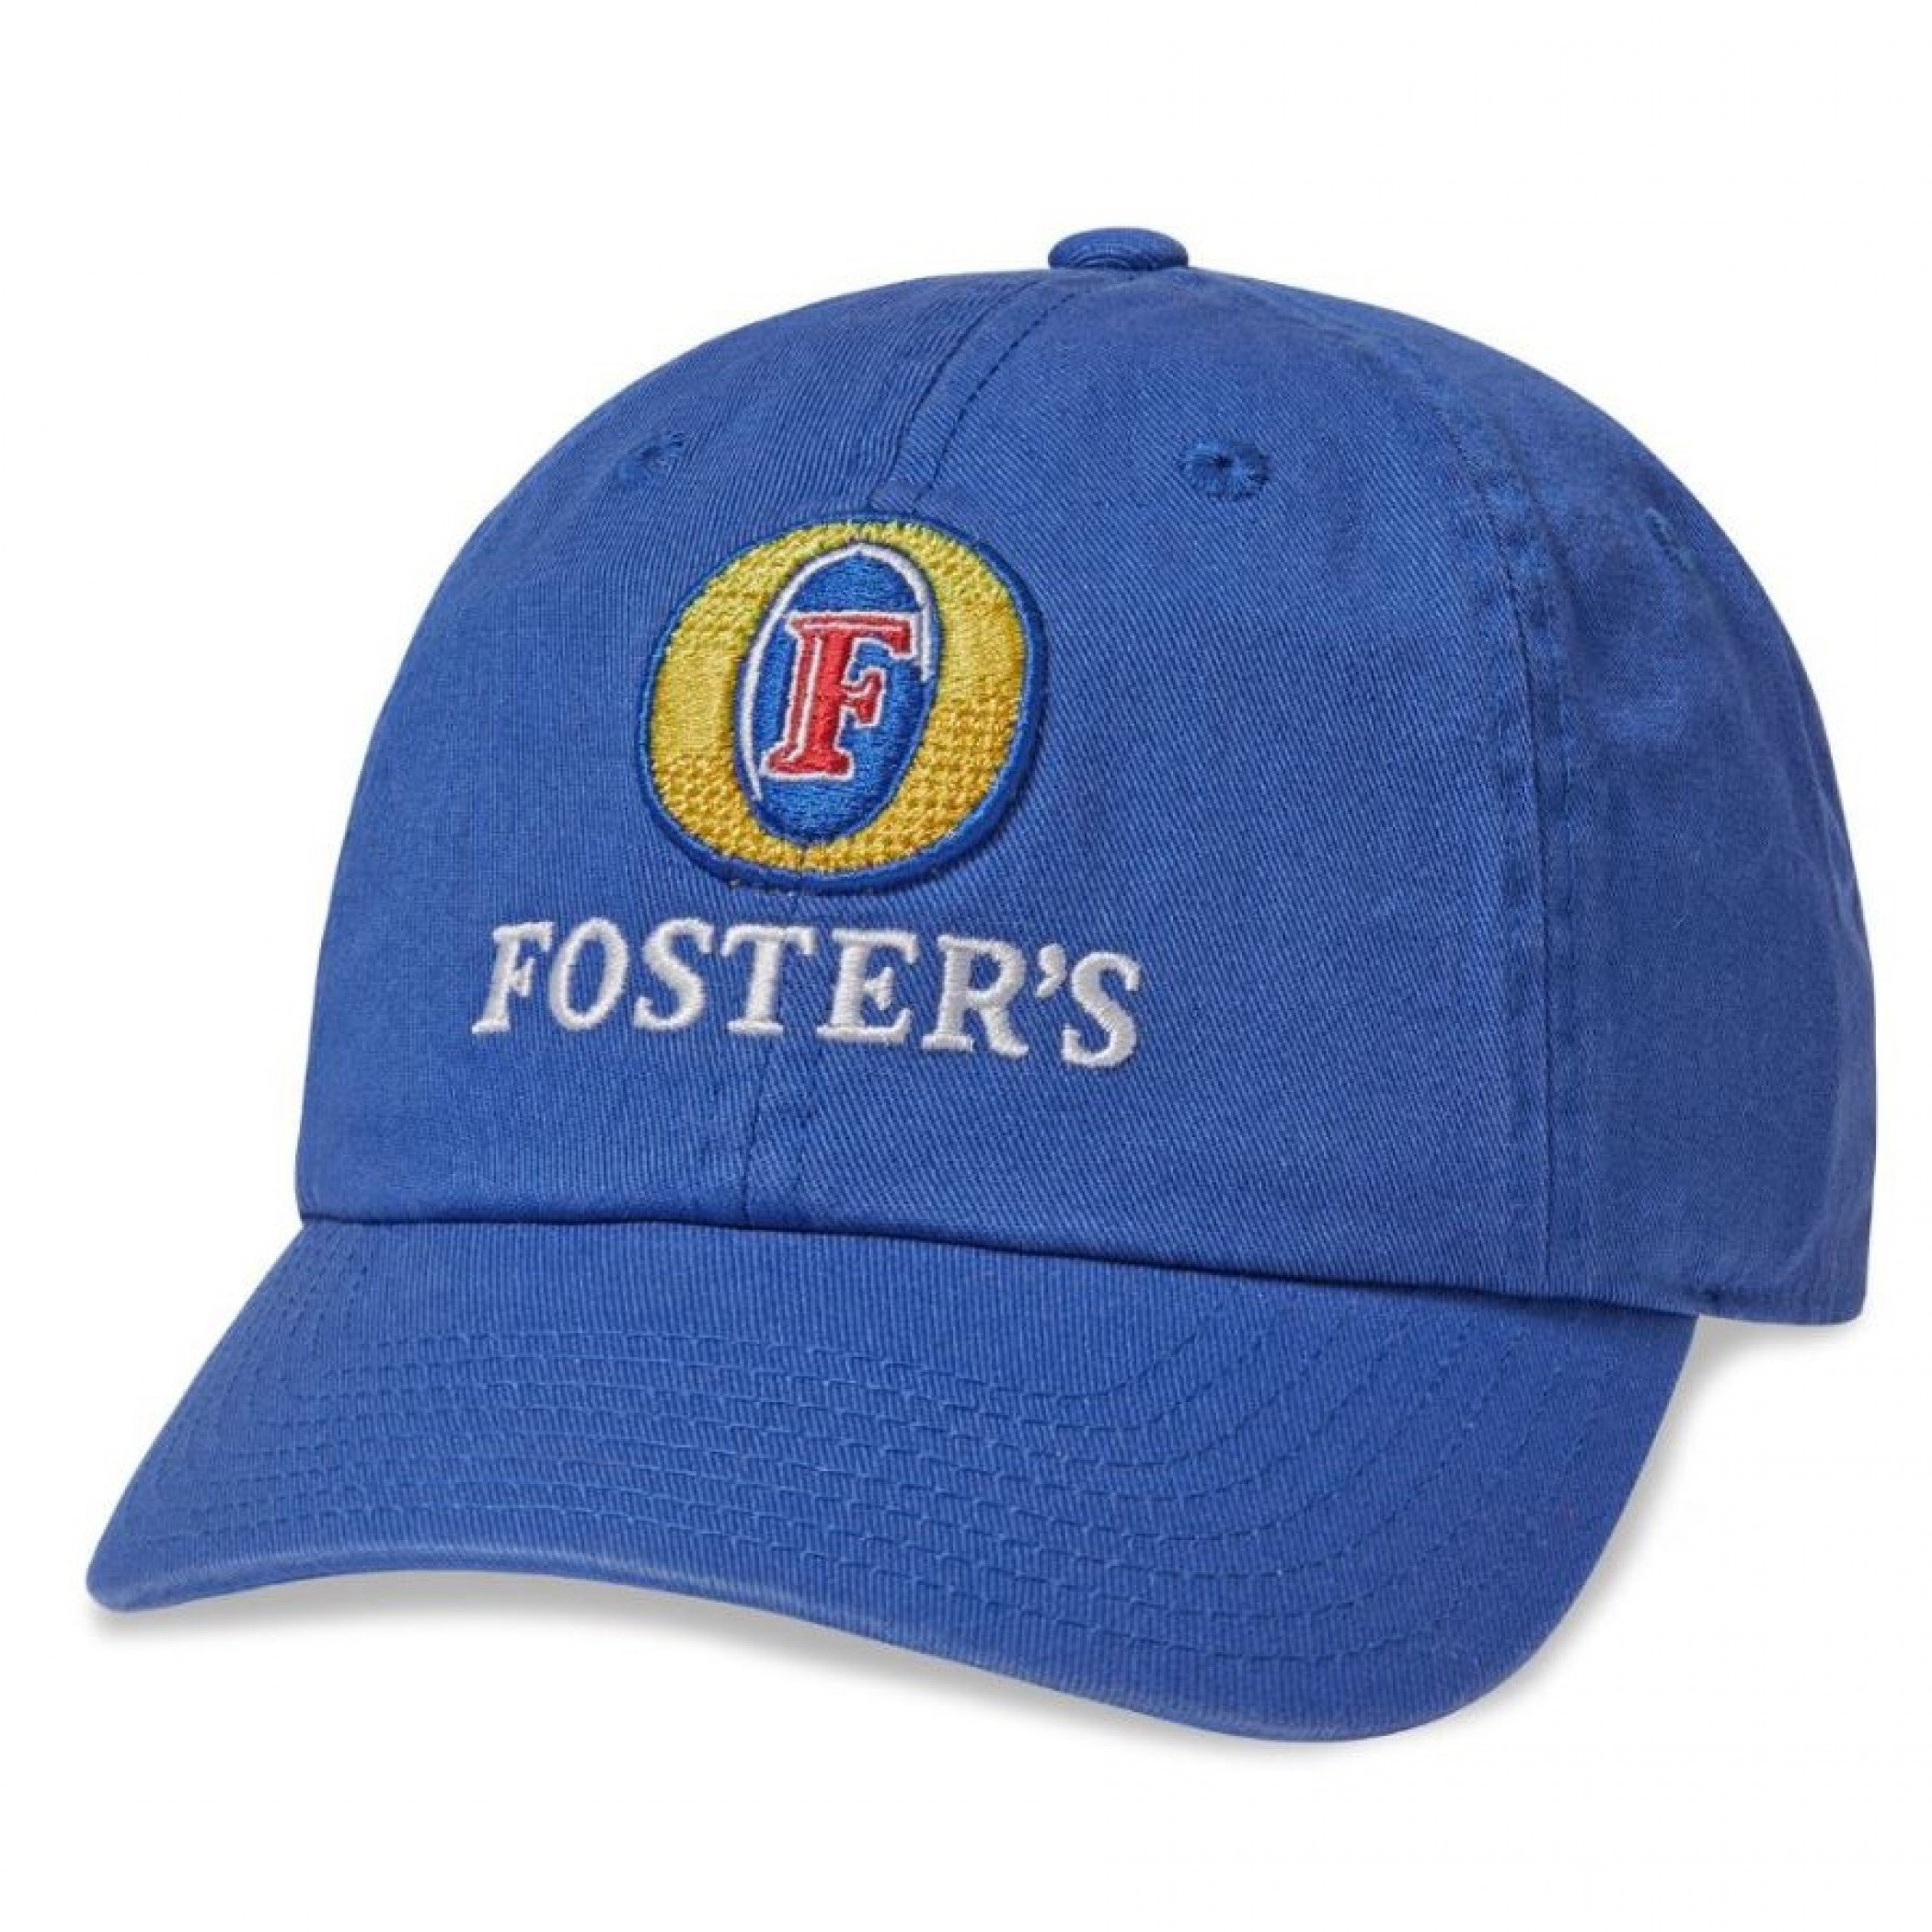 Foster's Beer Logo Blue Adjustable Ballpark Hat